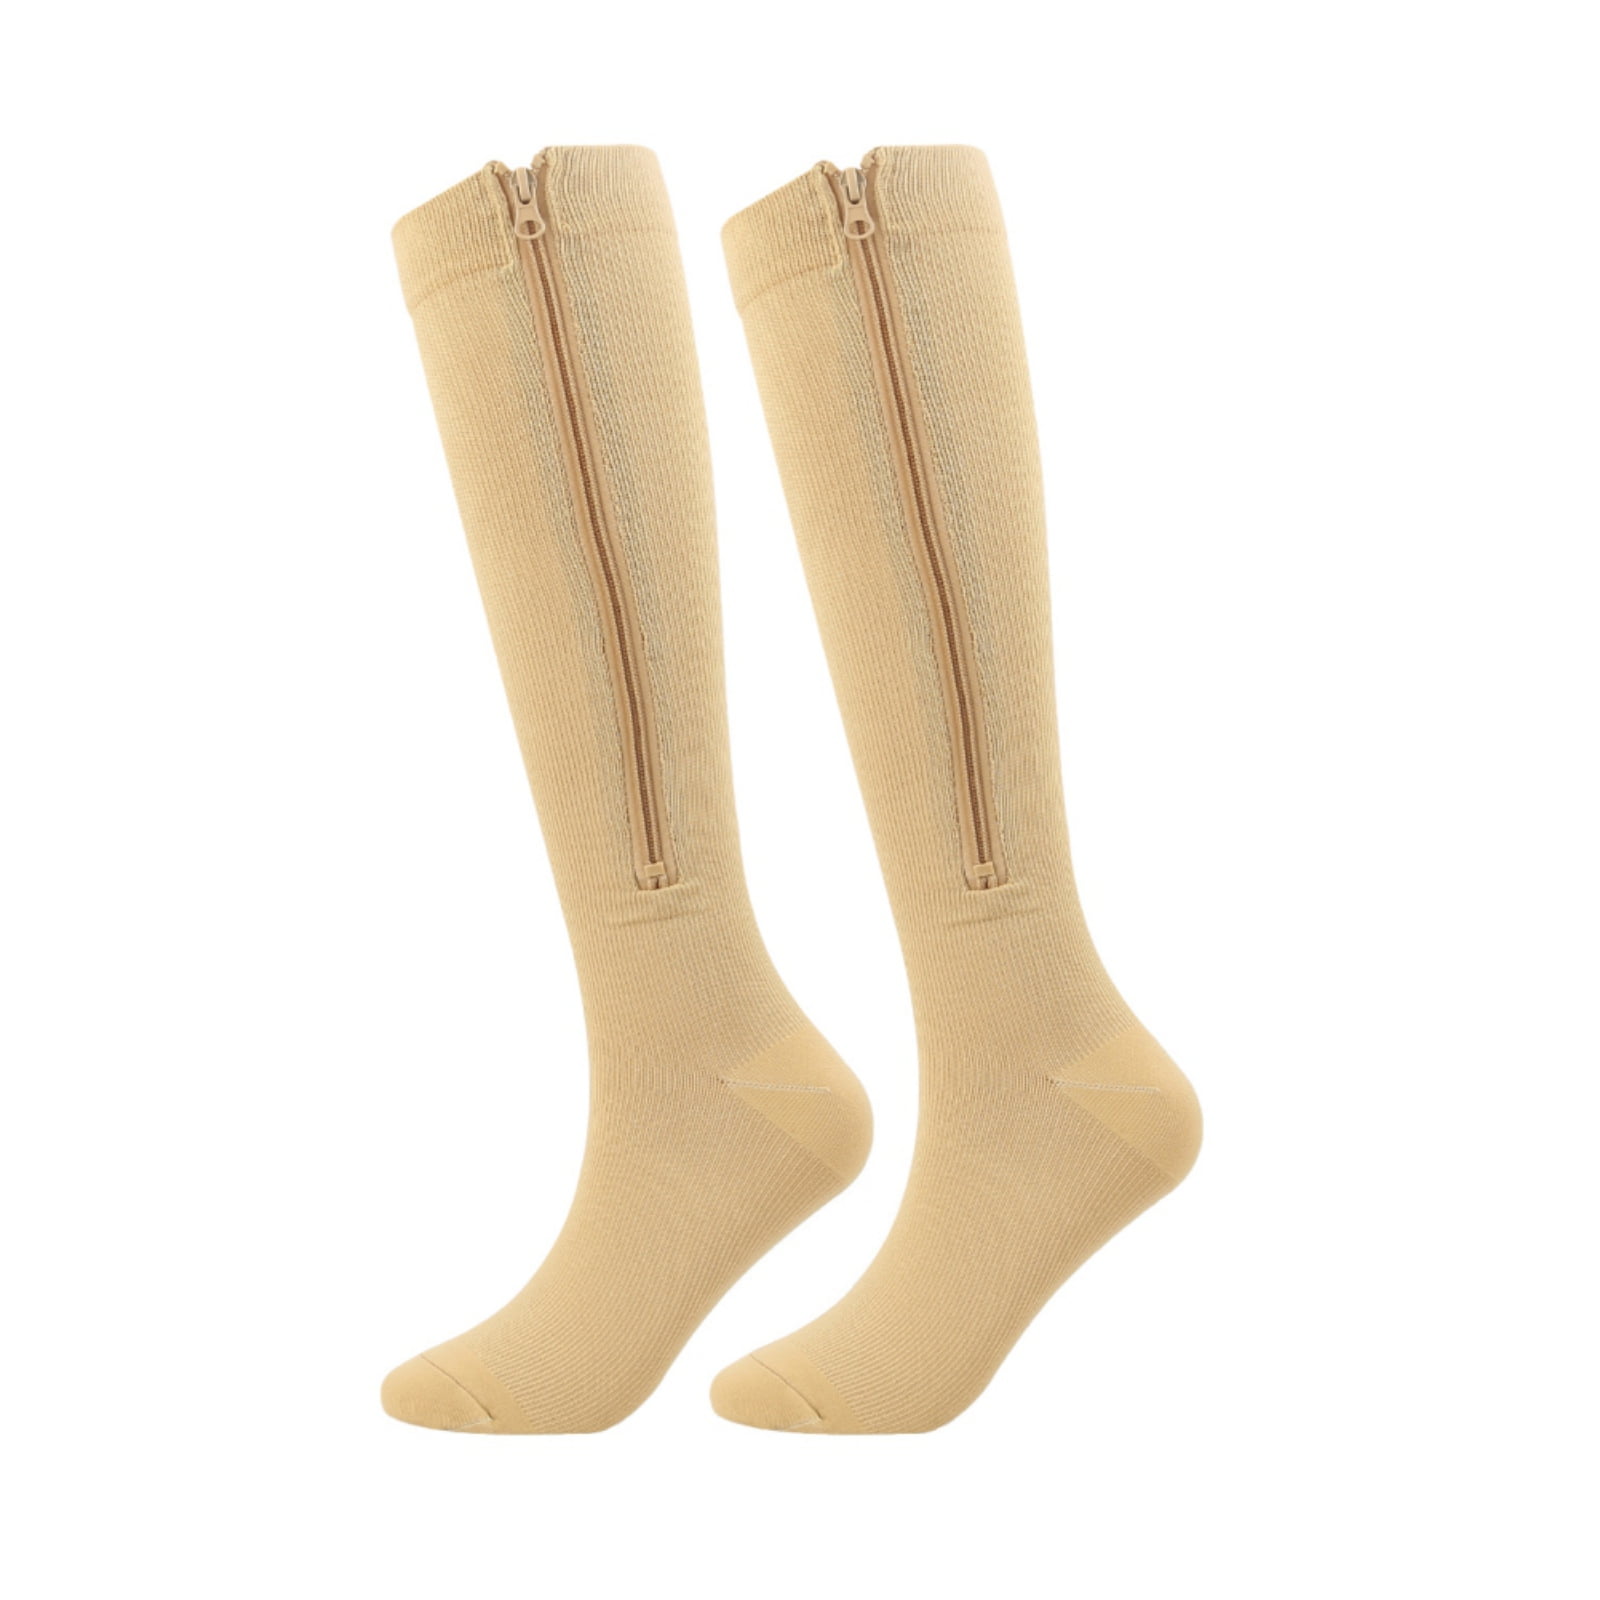 Zipper Compression Socks for Men & Women, 15-20 mmHg Closed Toe ...